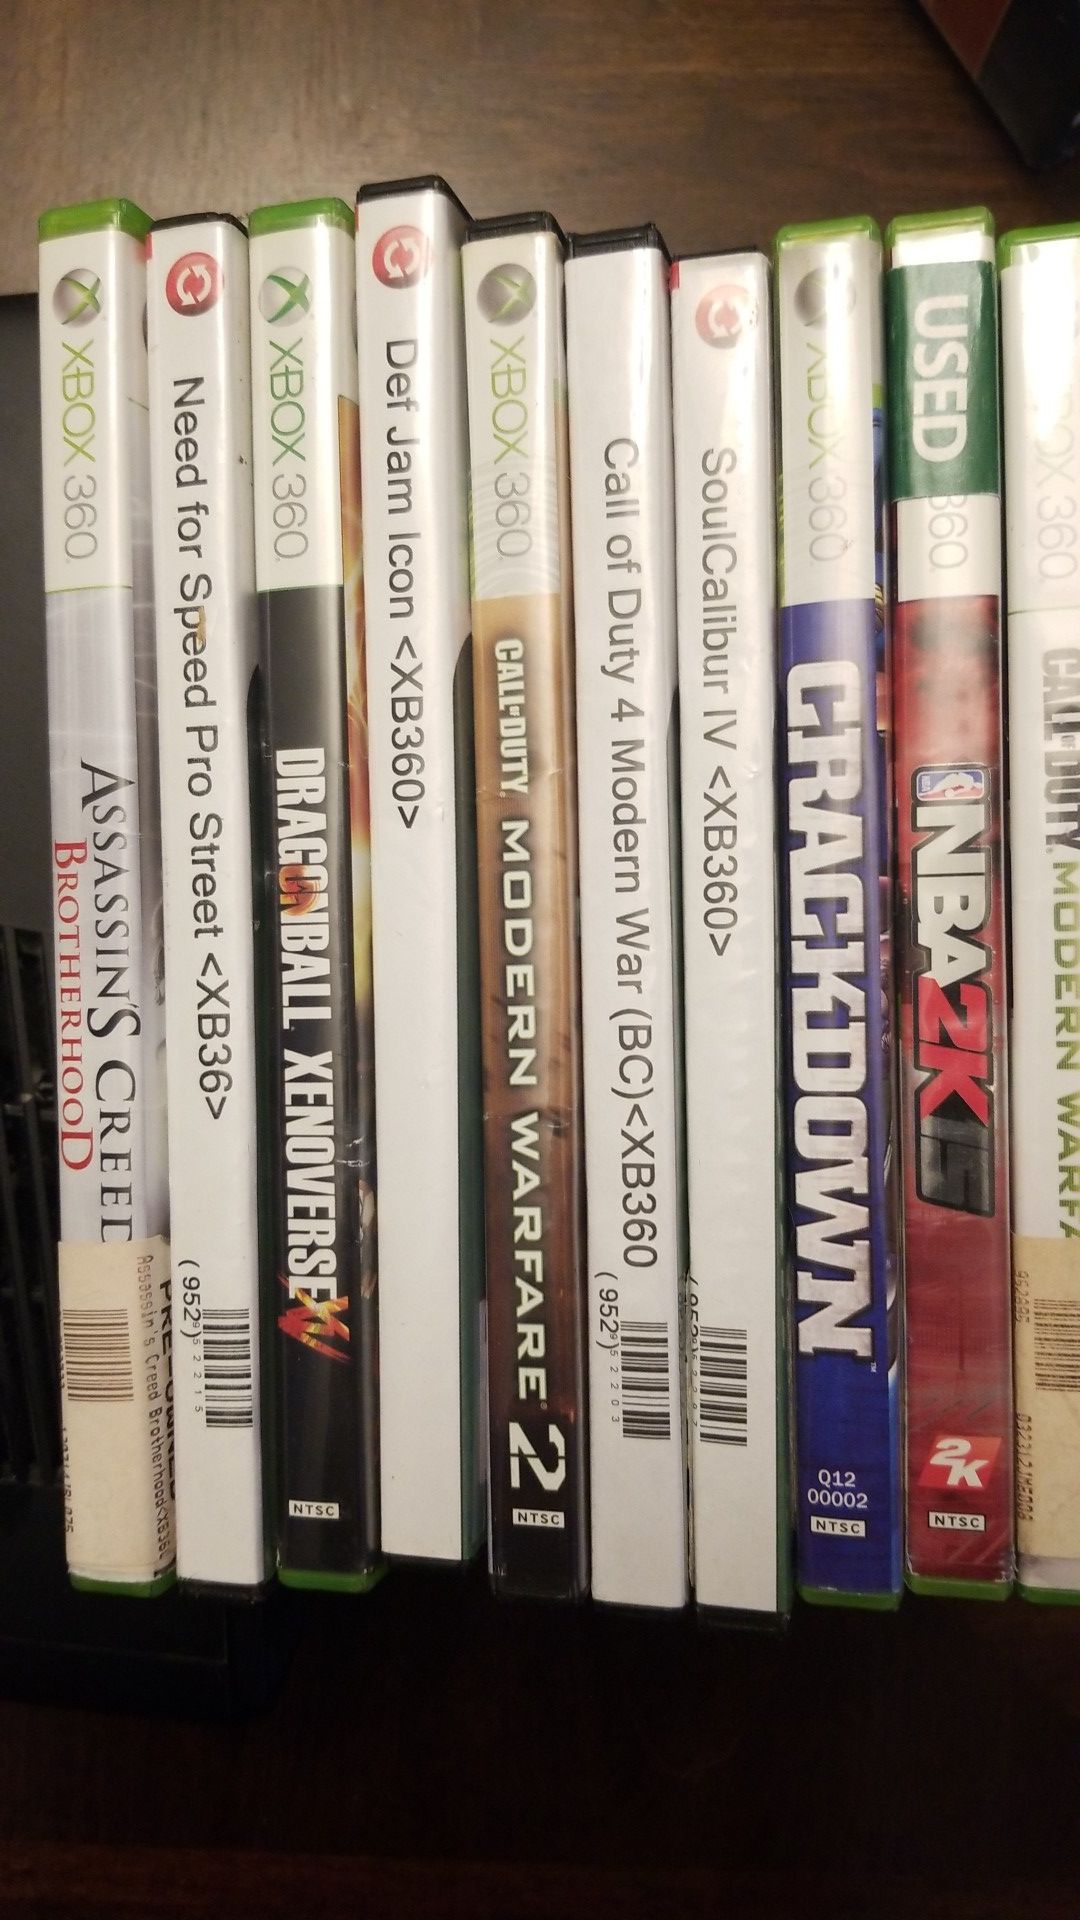 Xbox 360 & games